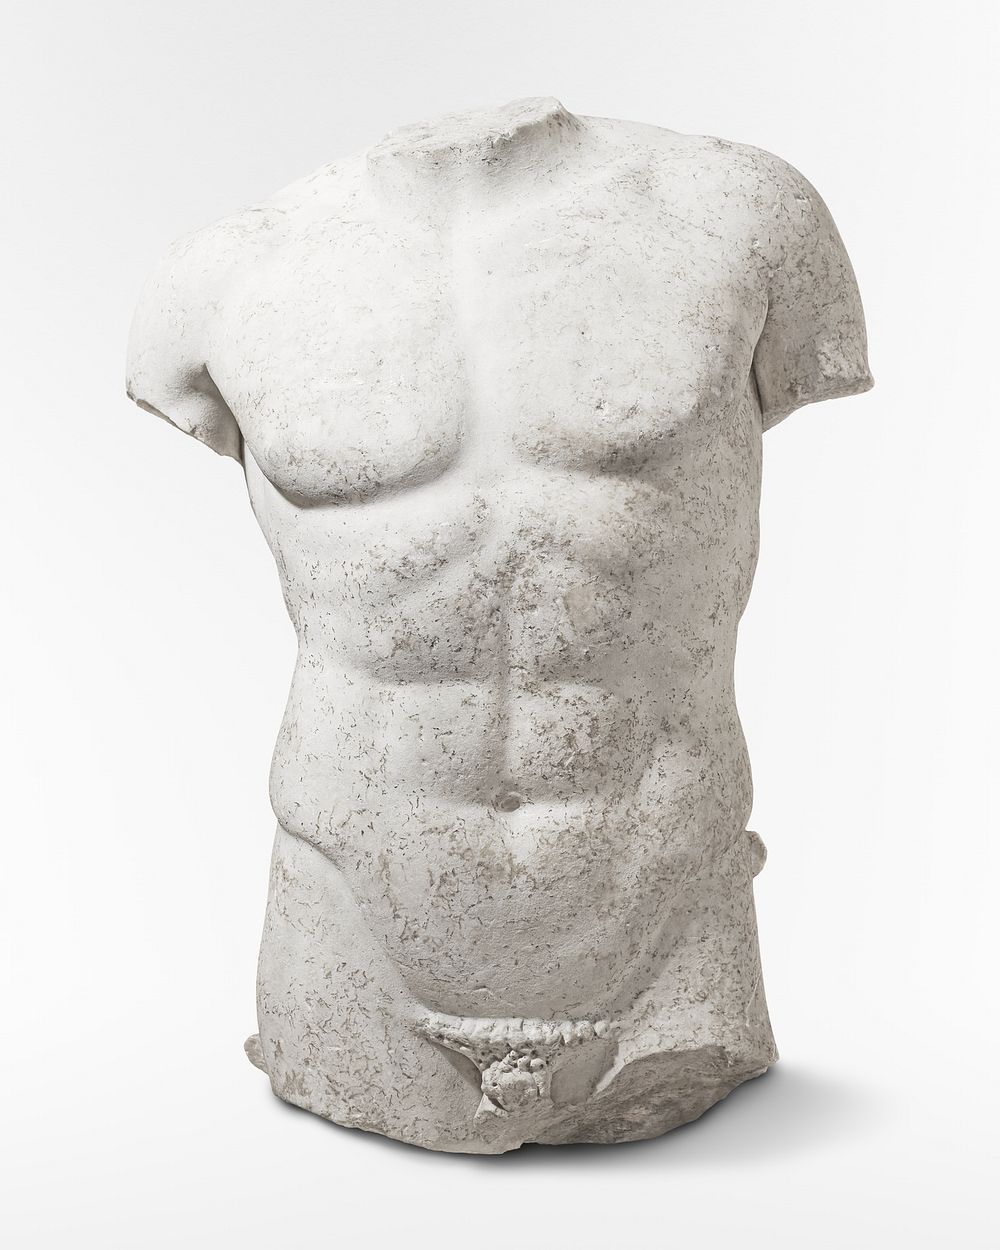 Torso (146&ndash;27 BCE) sculpture. Original public domain image from The Minneapolis Institute of Art. Digitally enhanced…